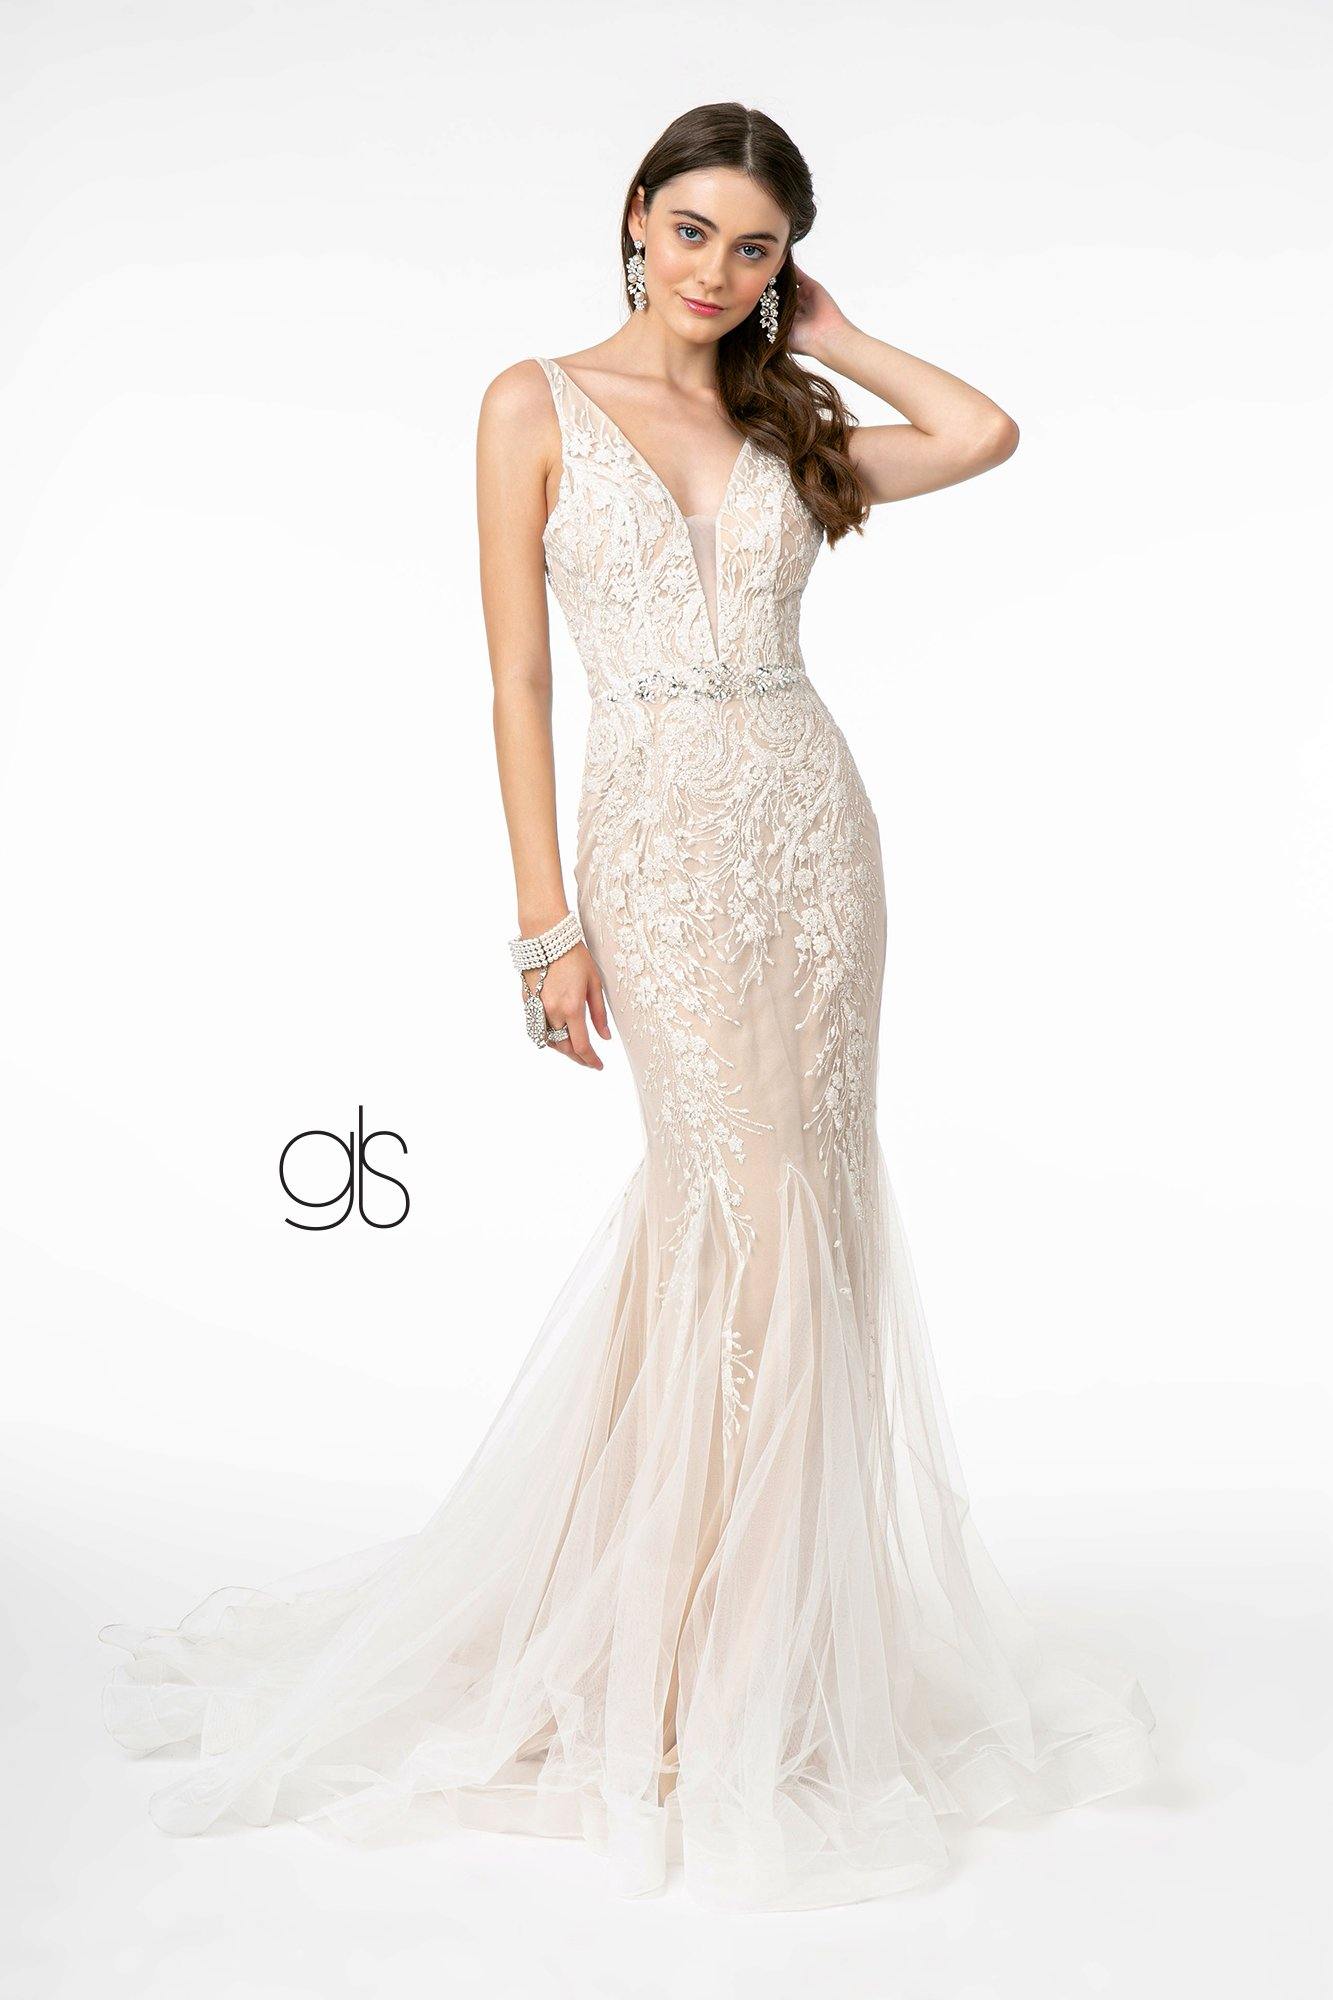 Mermaid Style Long Wedding Dress - The Dress Outlet Elizabeth K